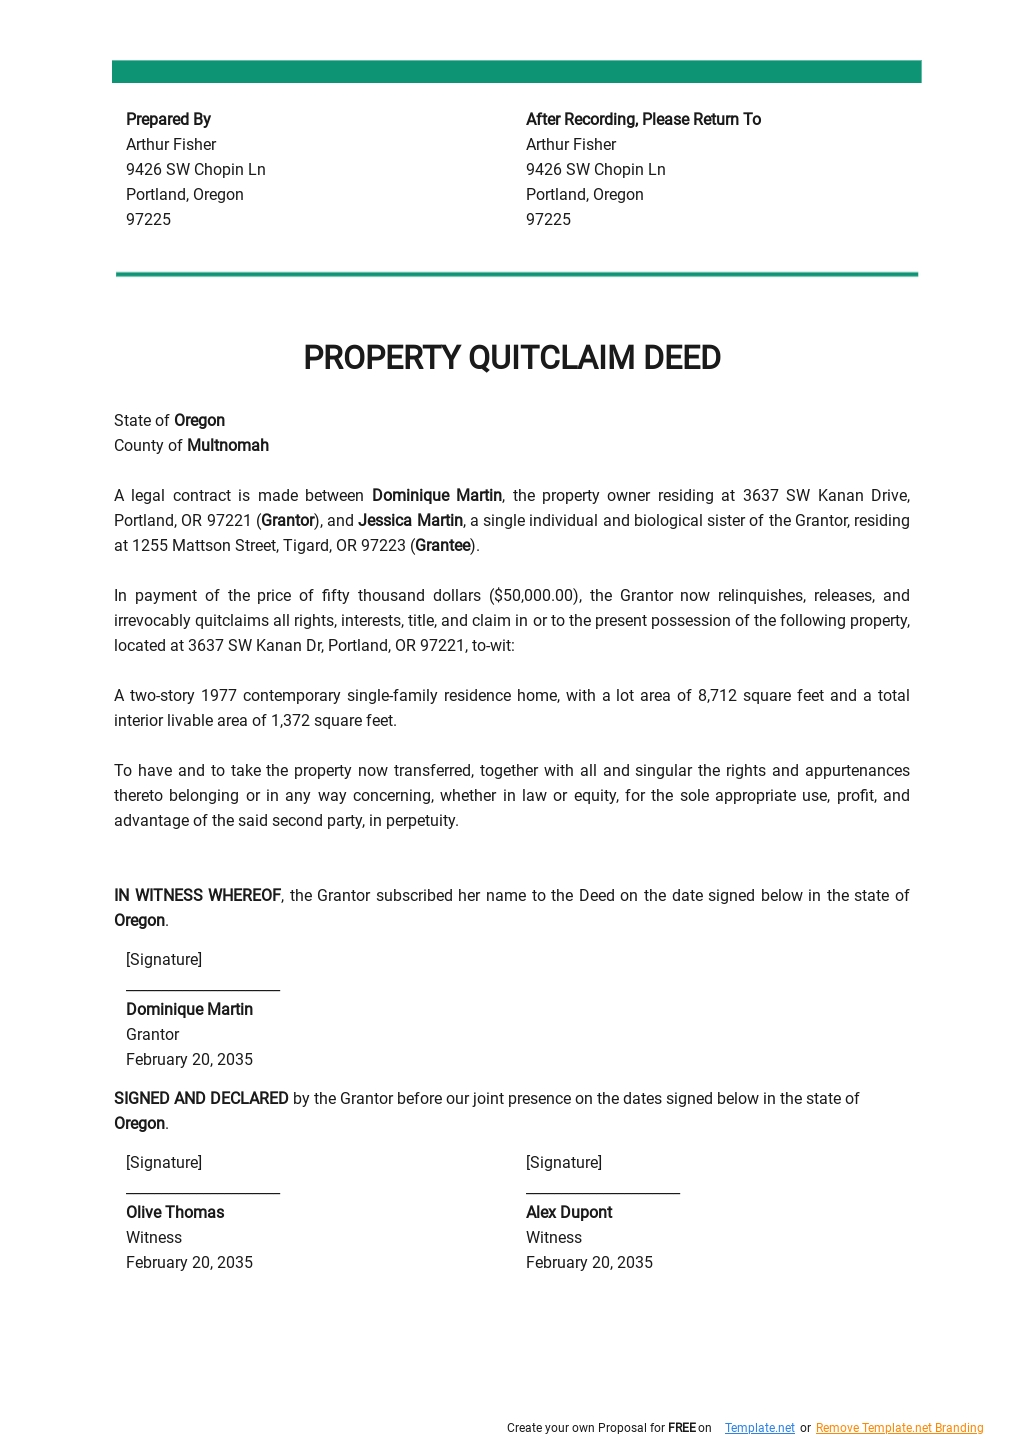 Property Quitclaim Deed Template